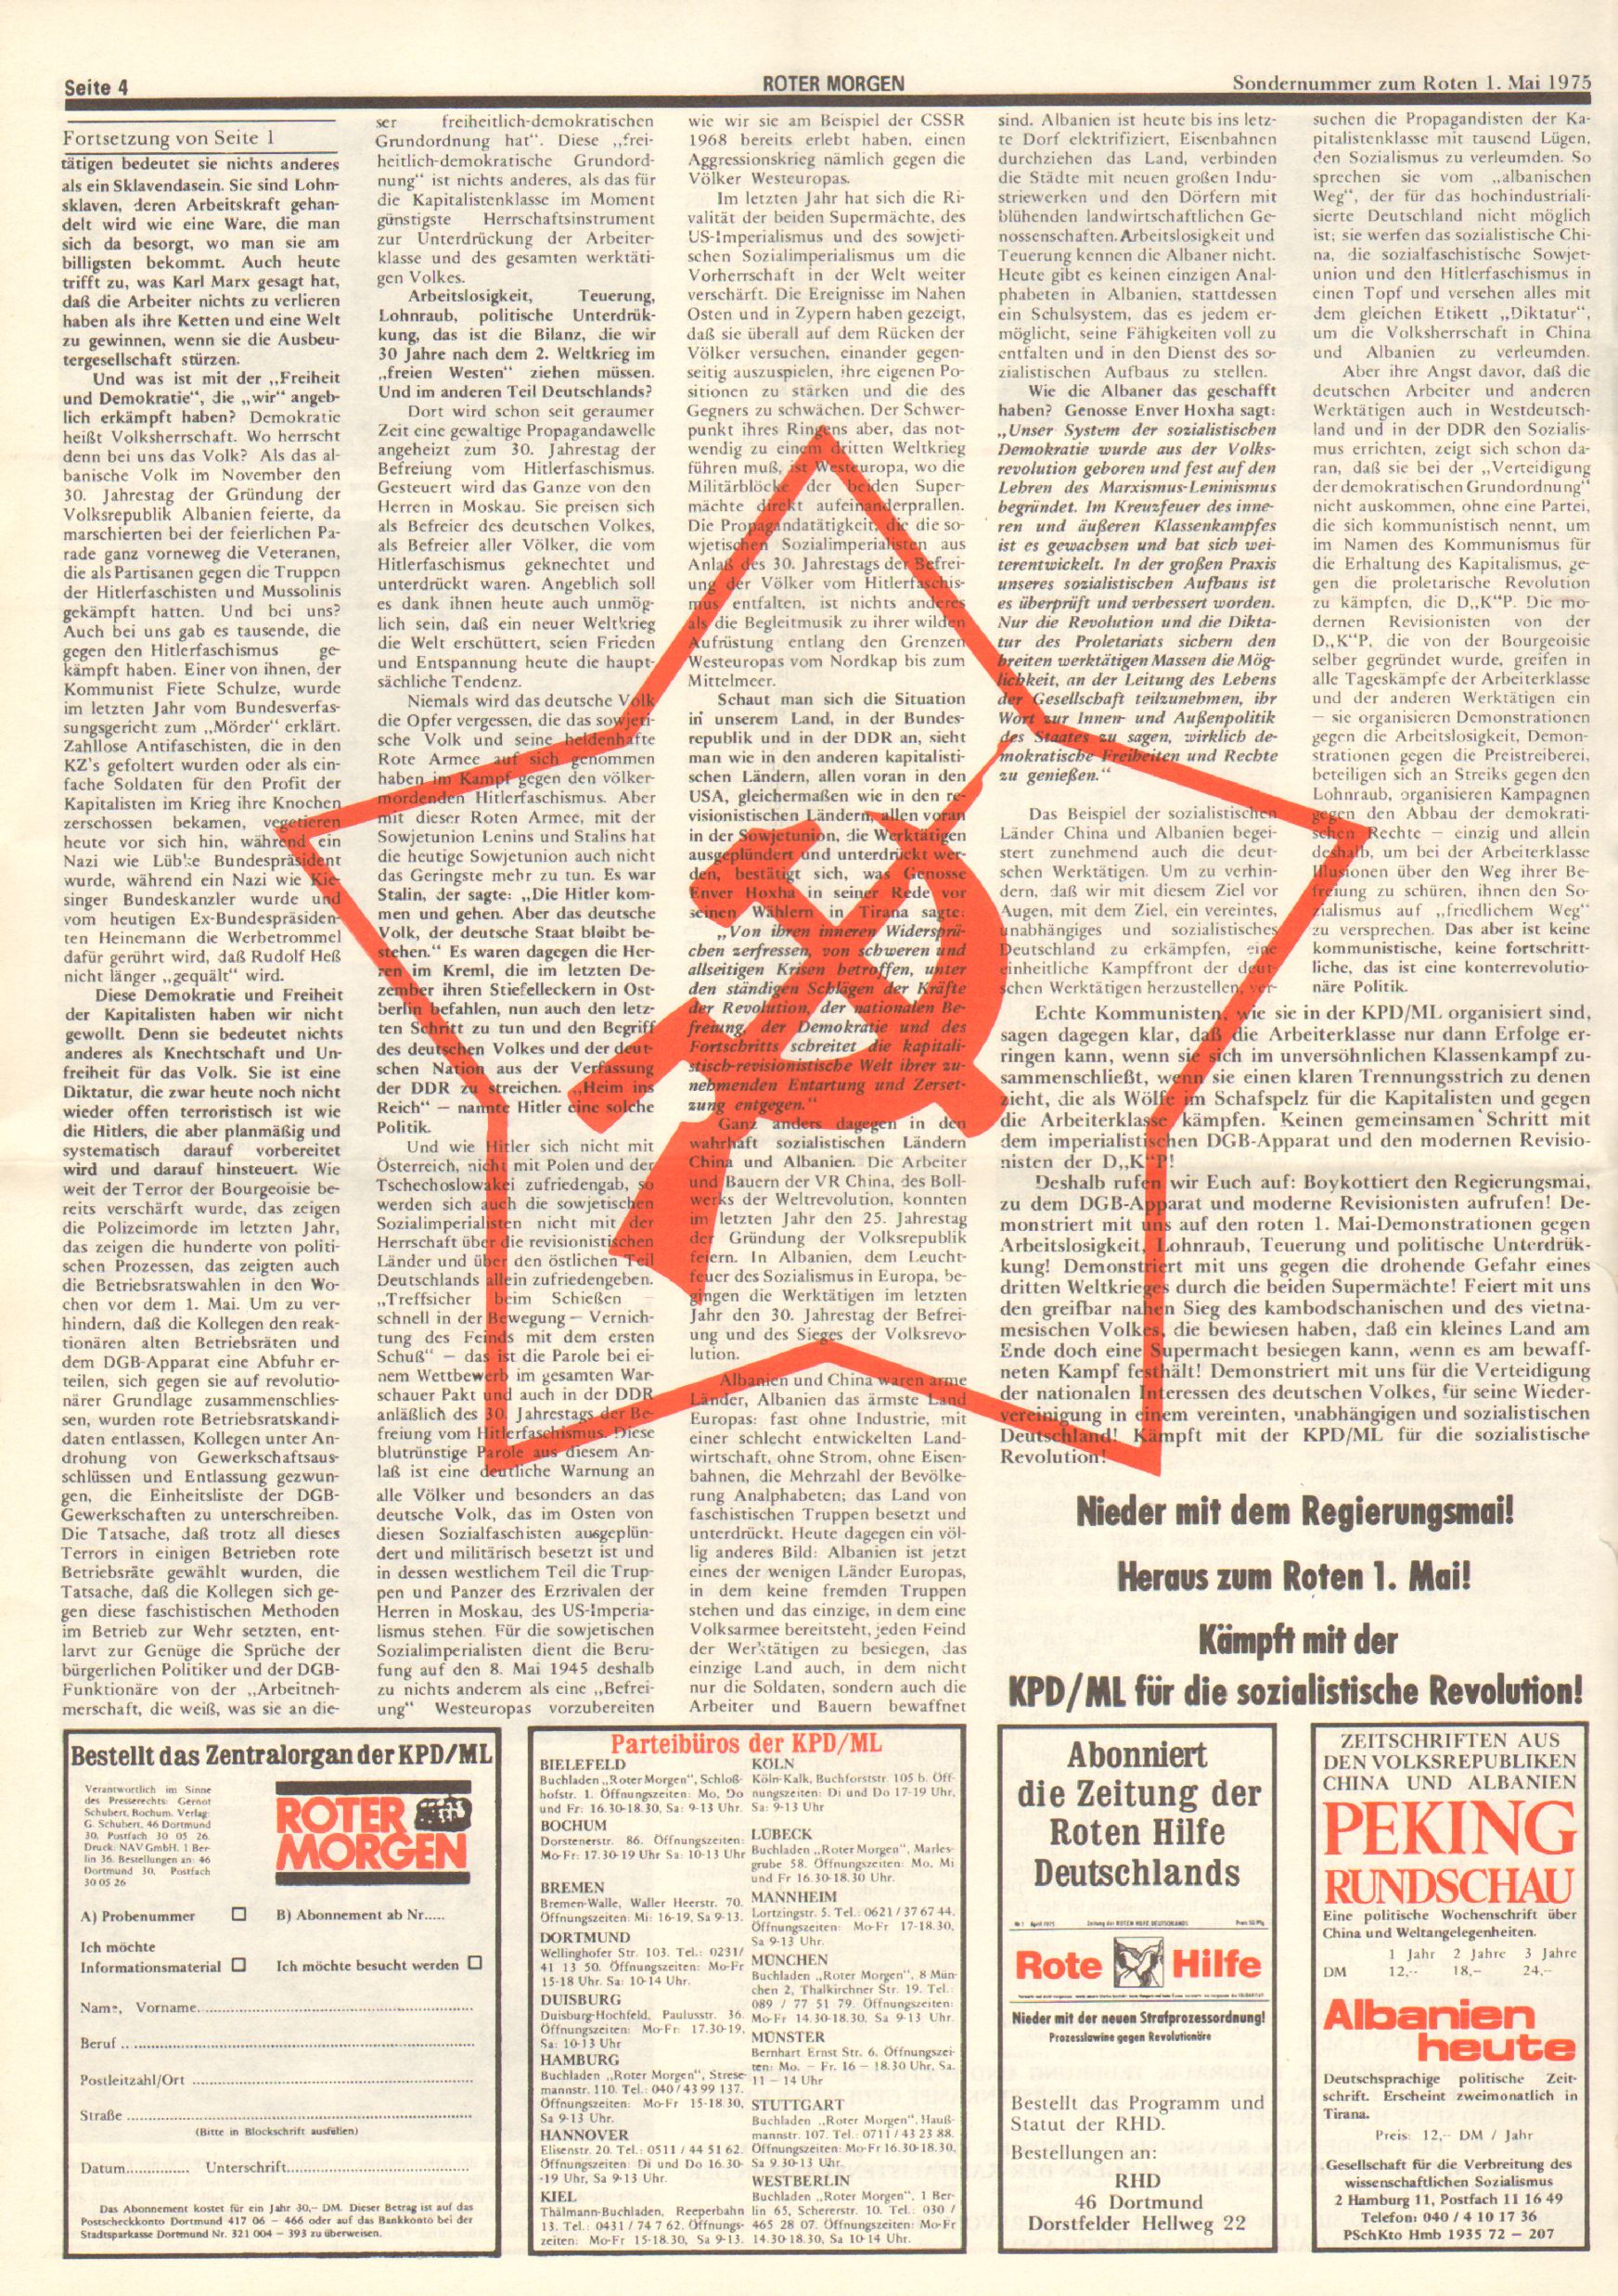 Roter Morgen, 9. Jg., April 1975, Sondernummer zum 1. Mai, Seite 4